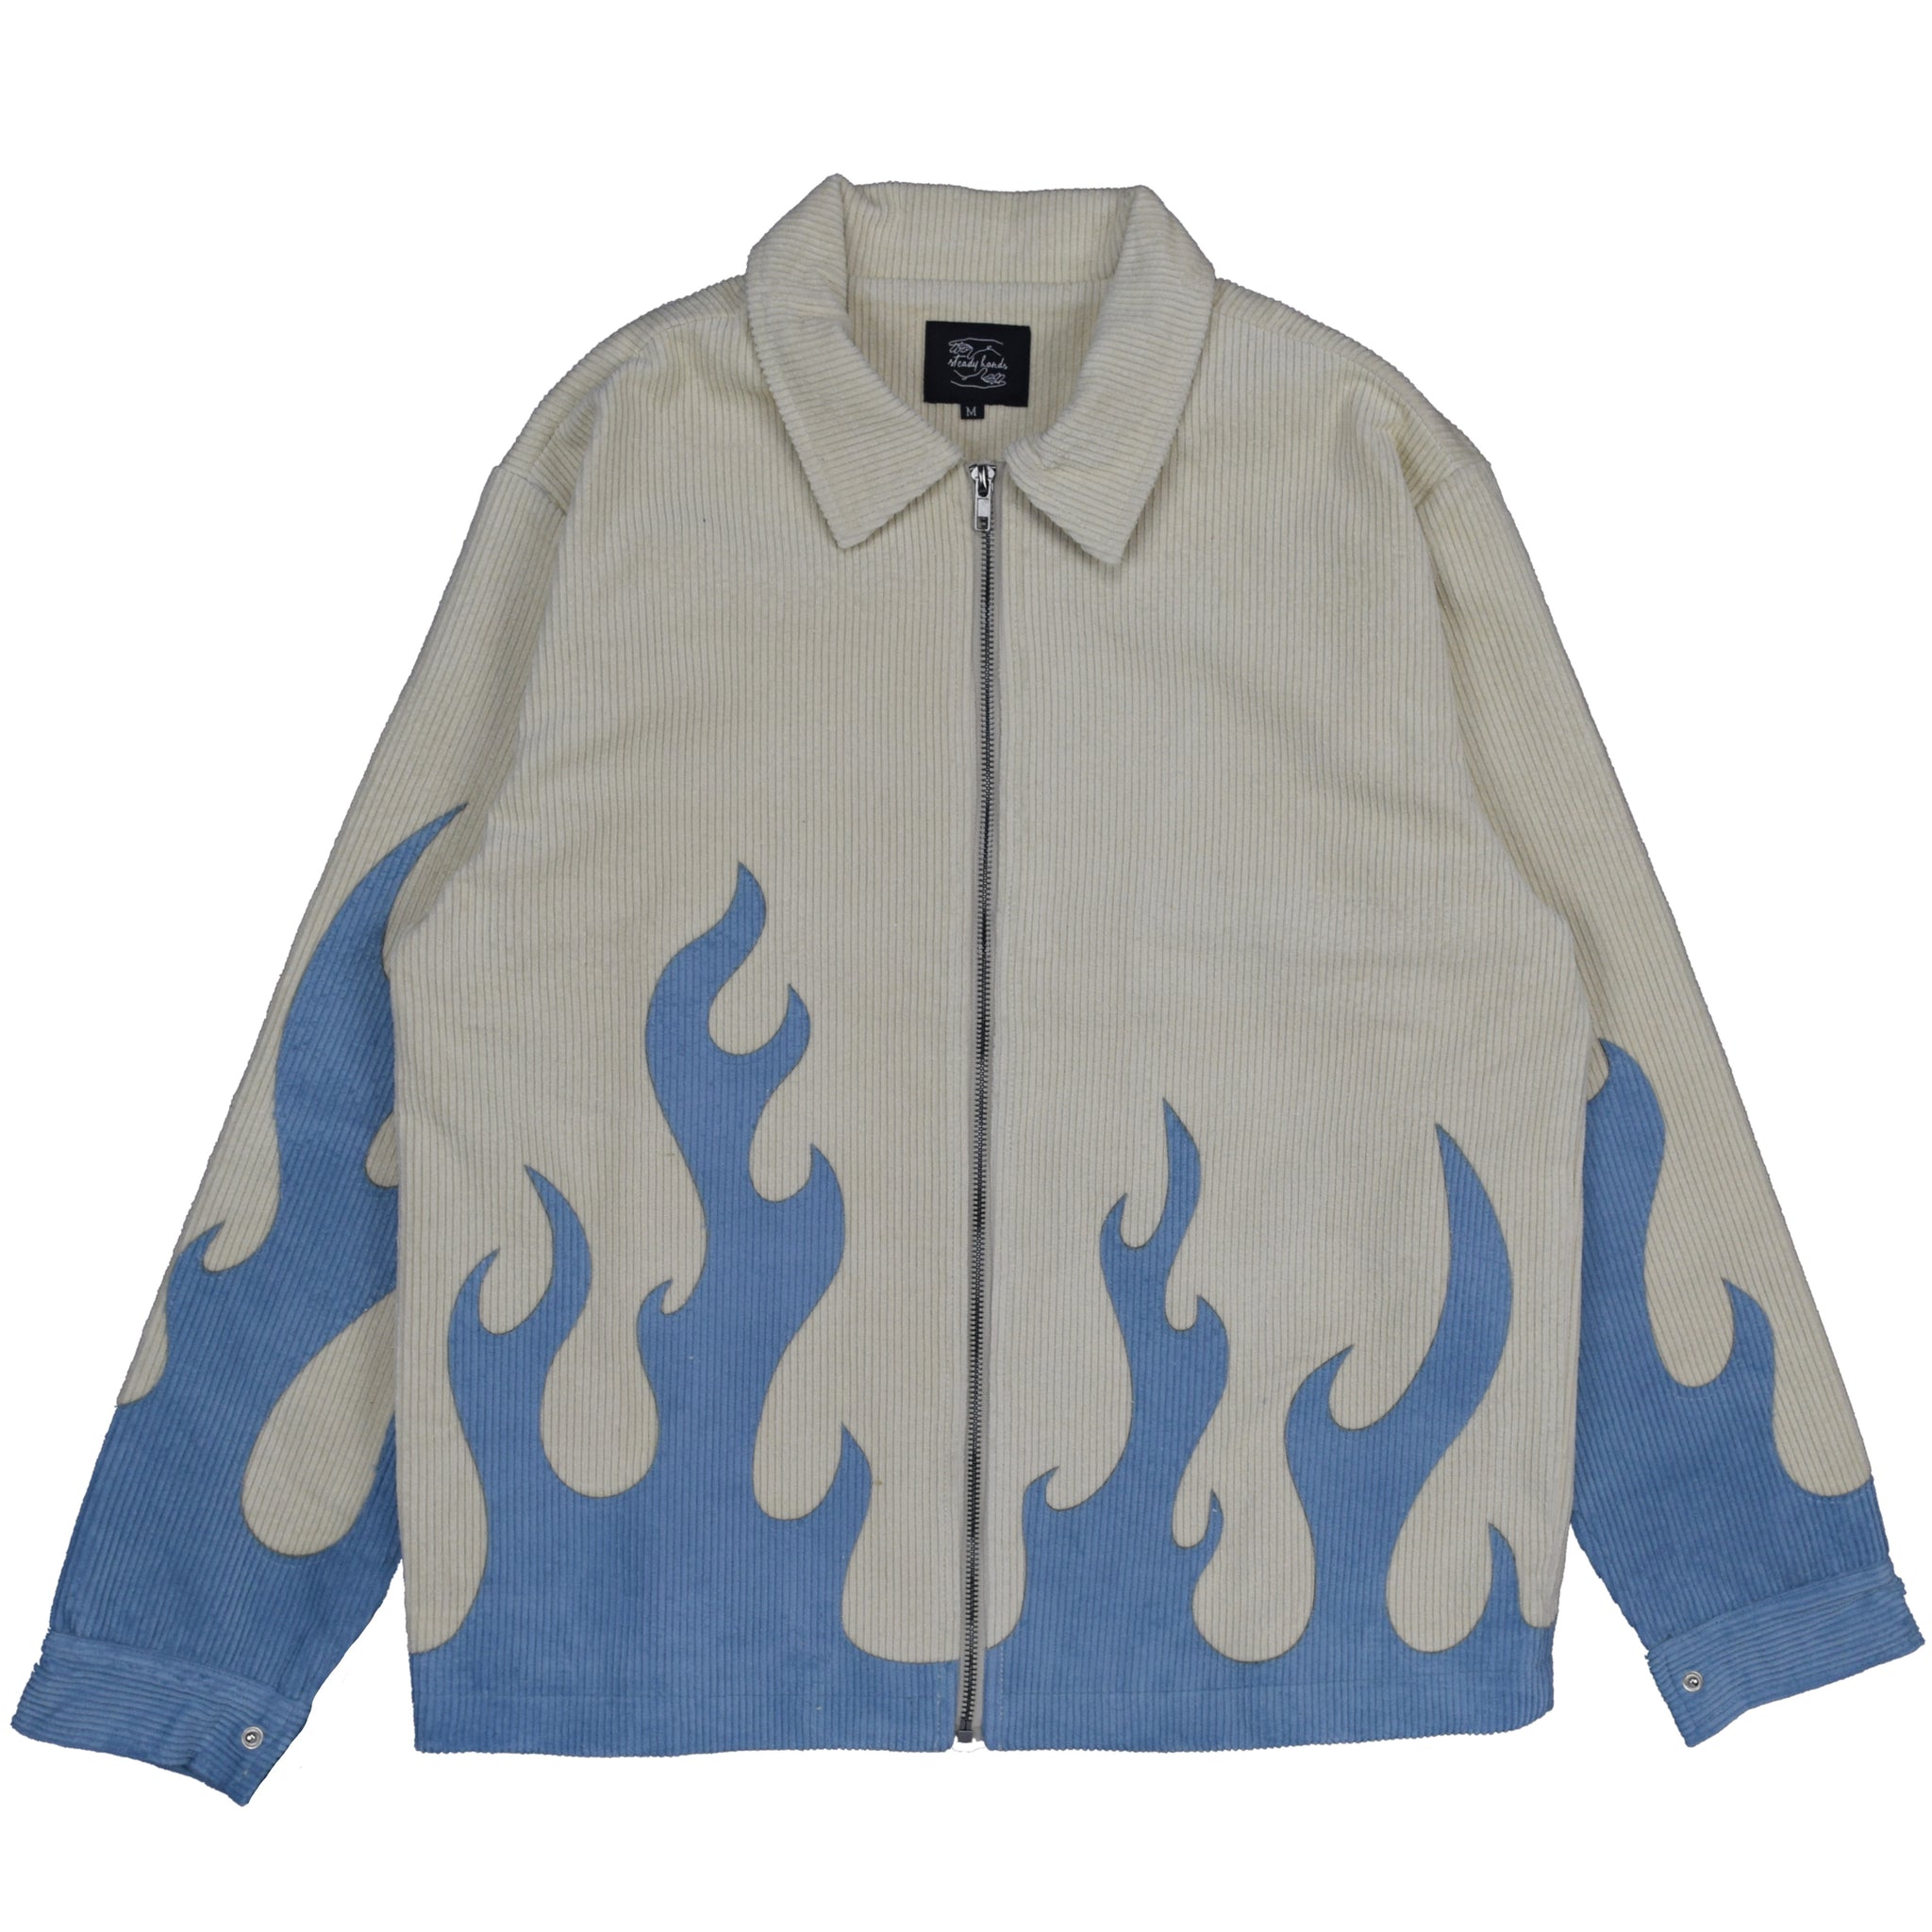 Coral Blue #3 Flame Jacket